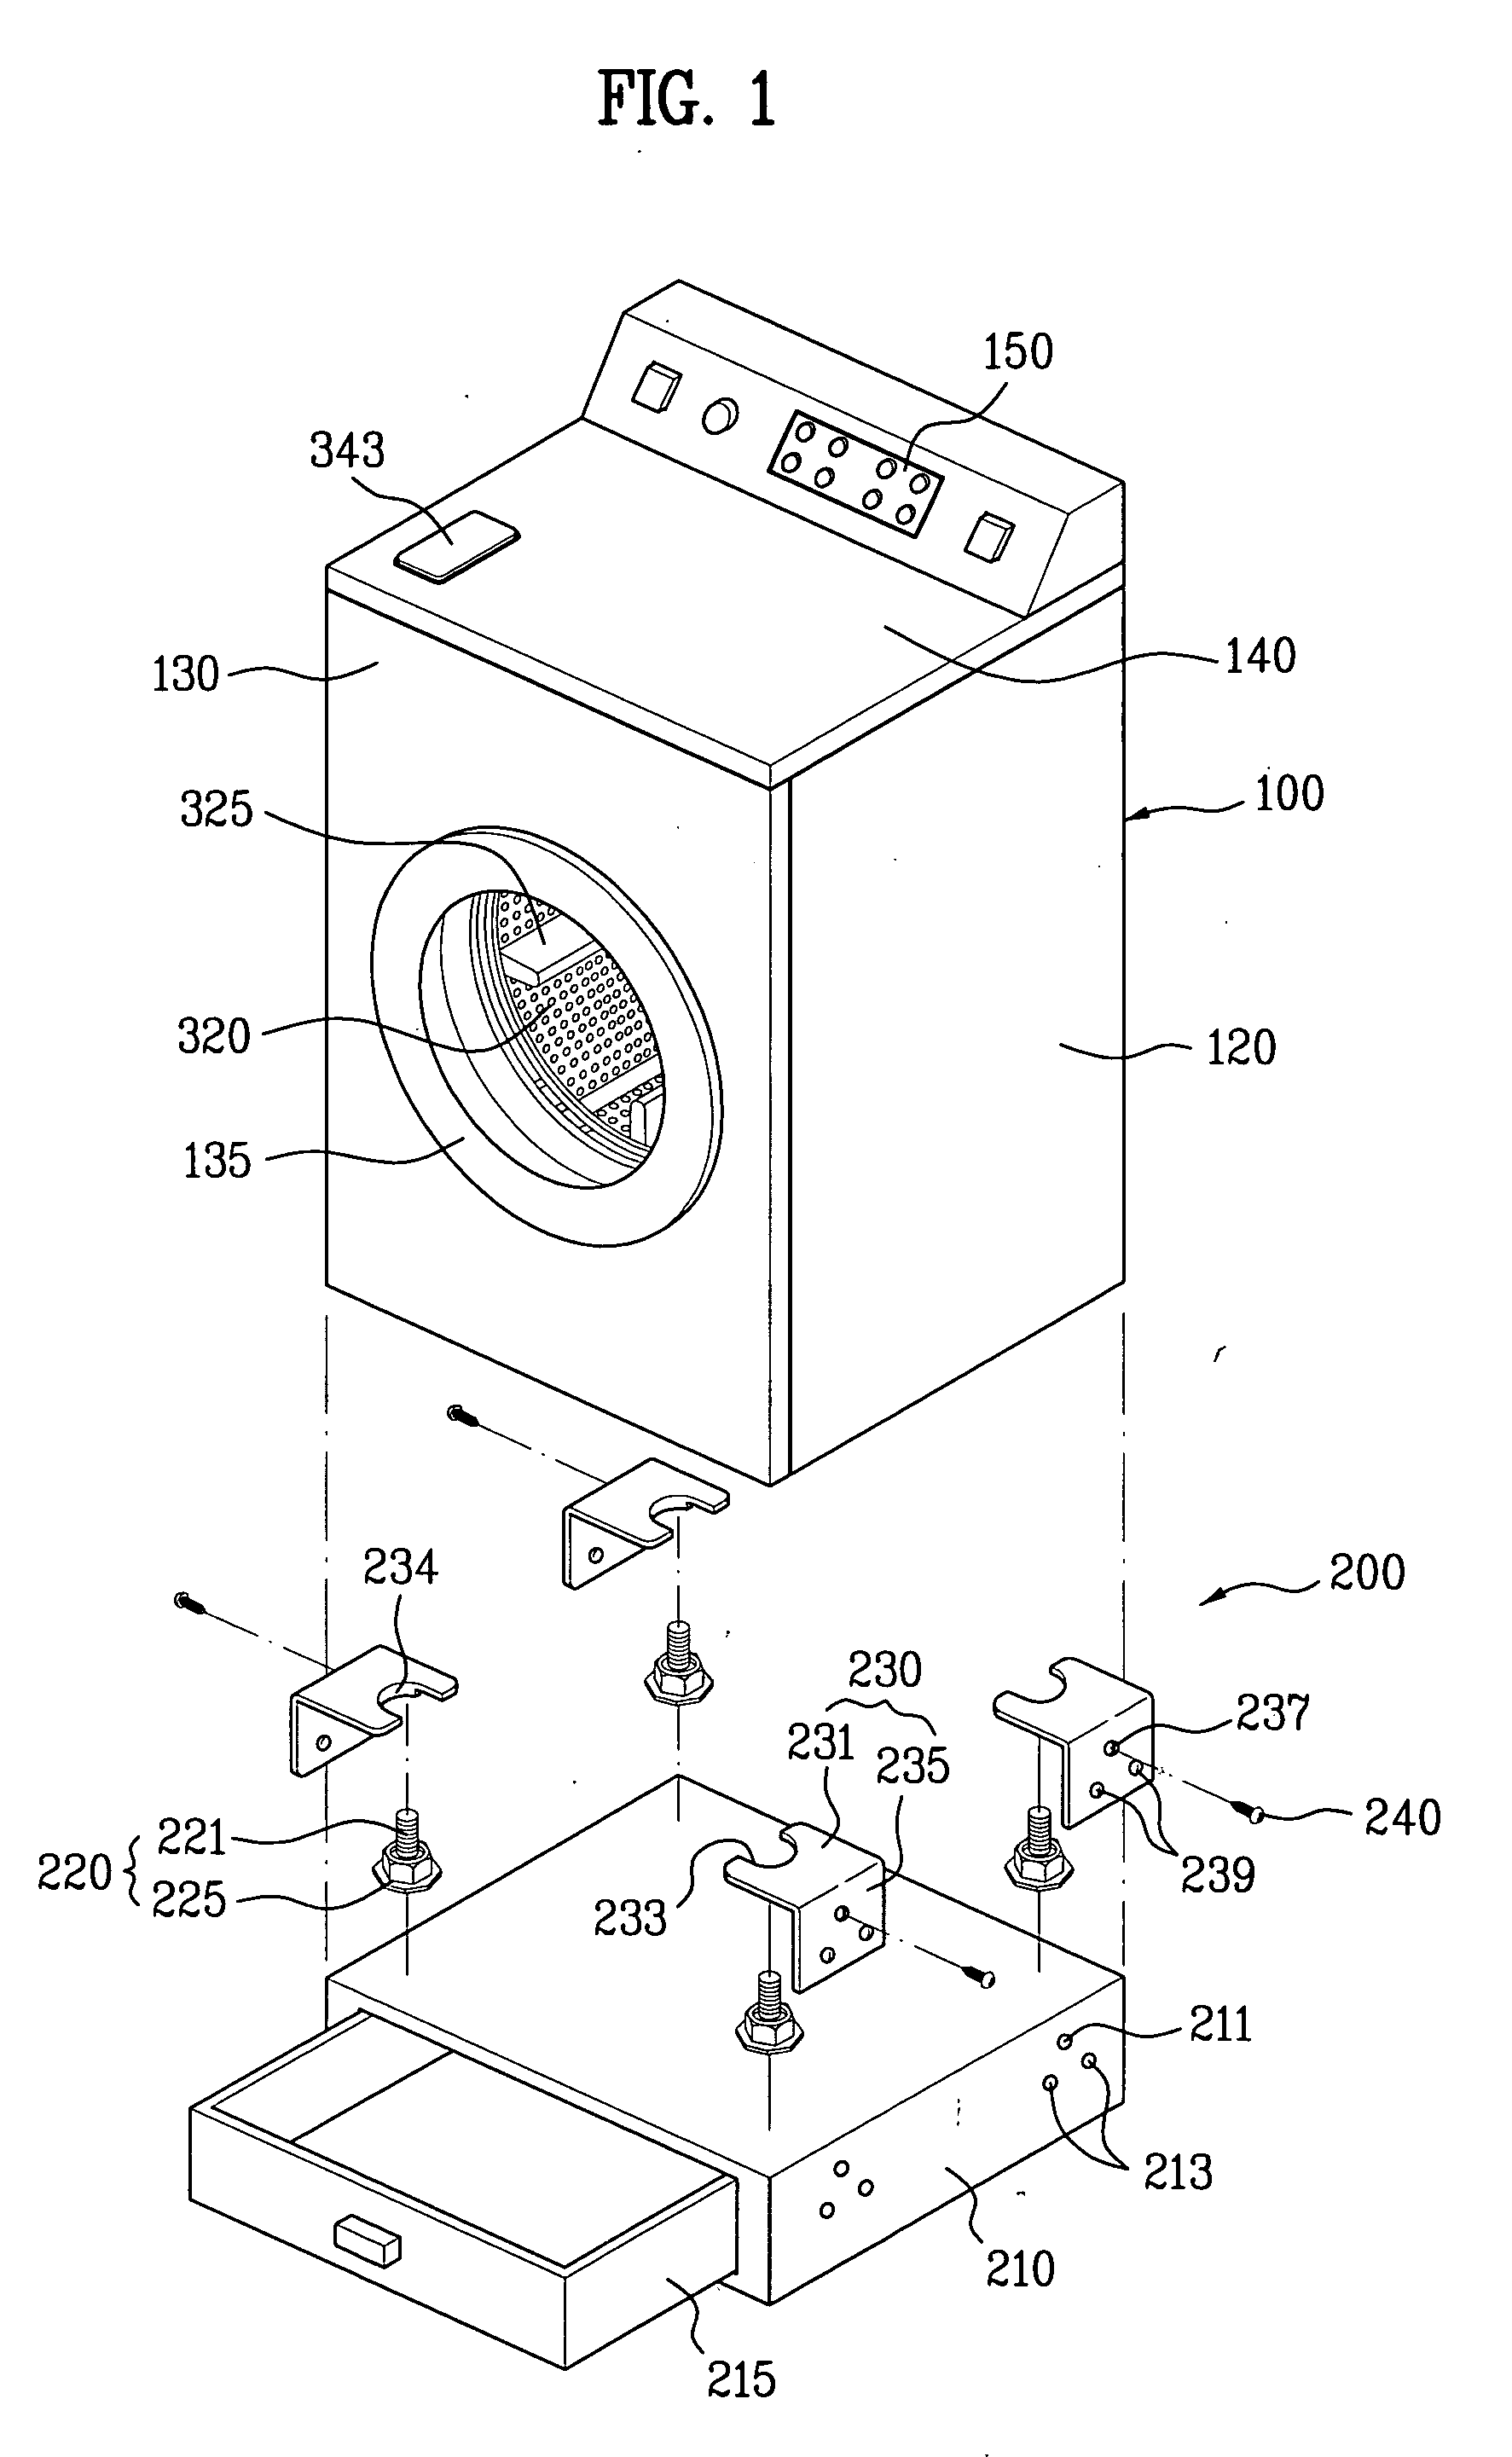 Pedestal assembly of washing machine